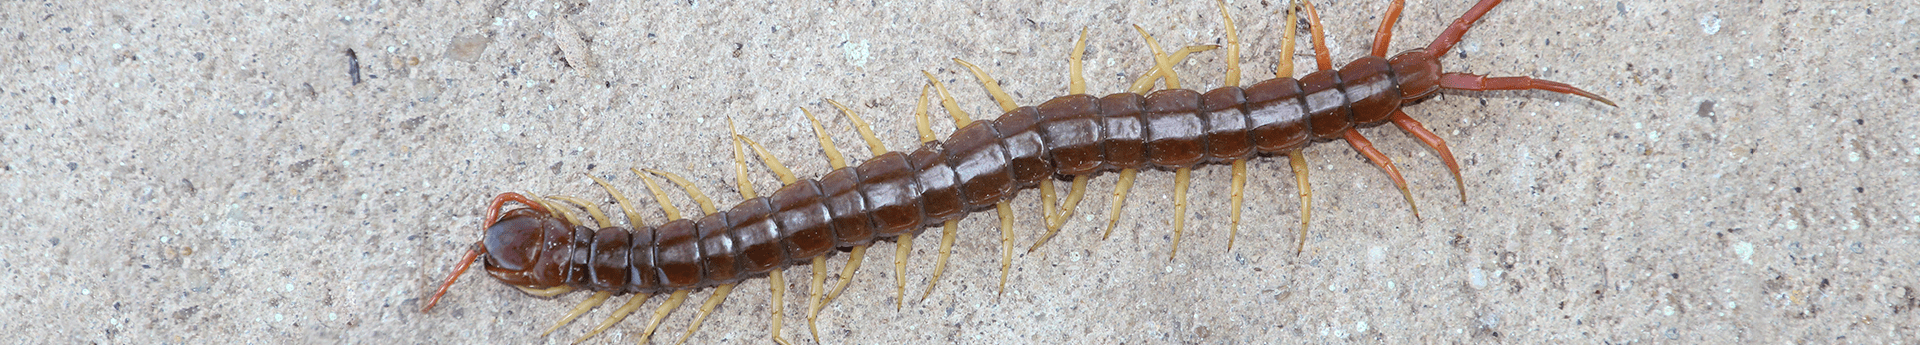 centipede on rock